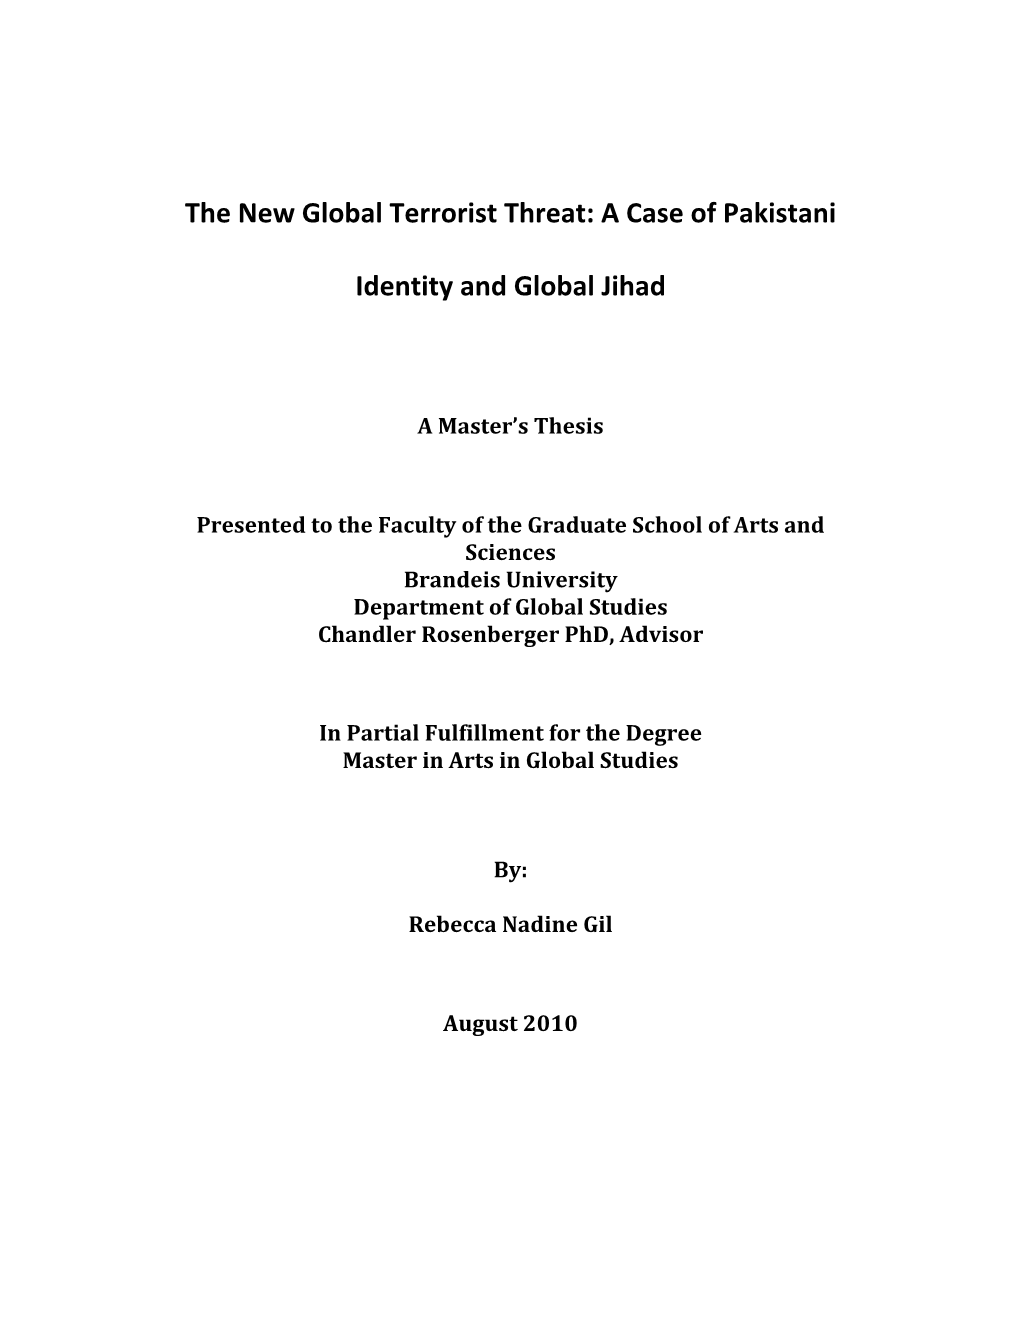 The New Global Terrorist Threat: a Case of Pakistani